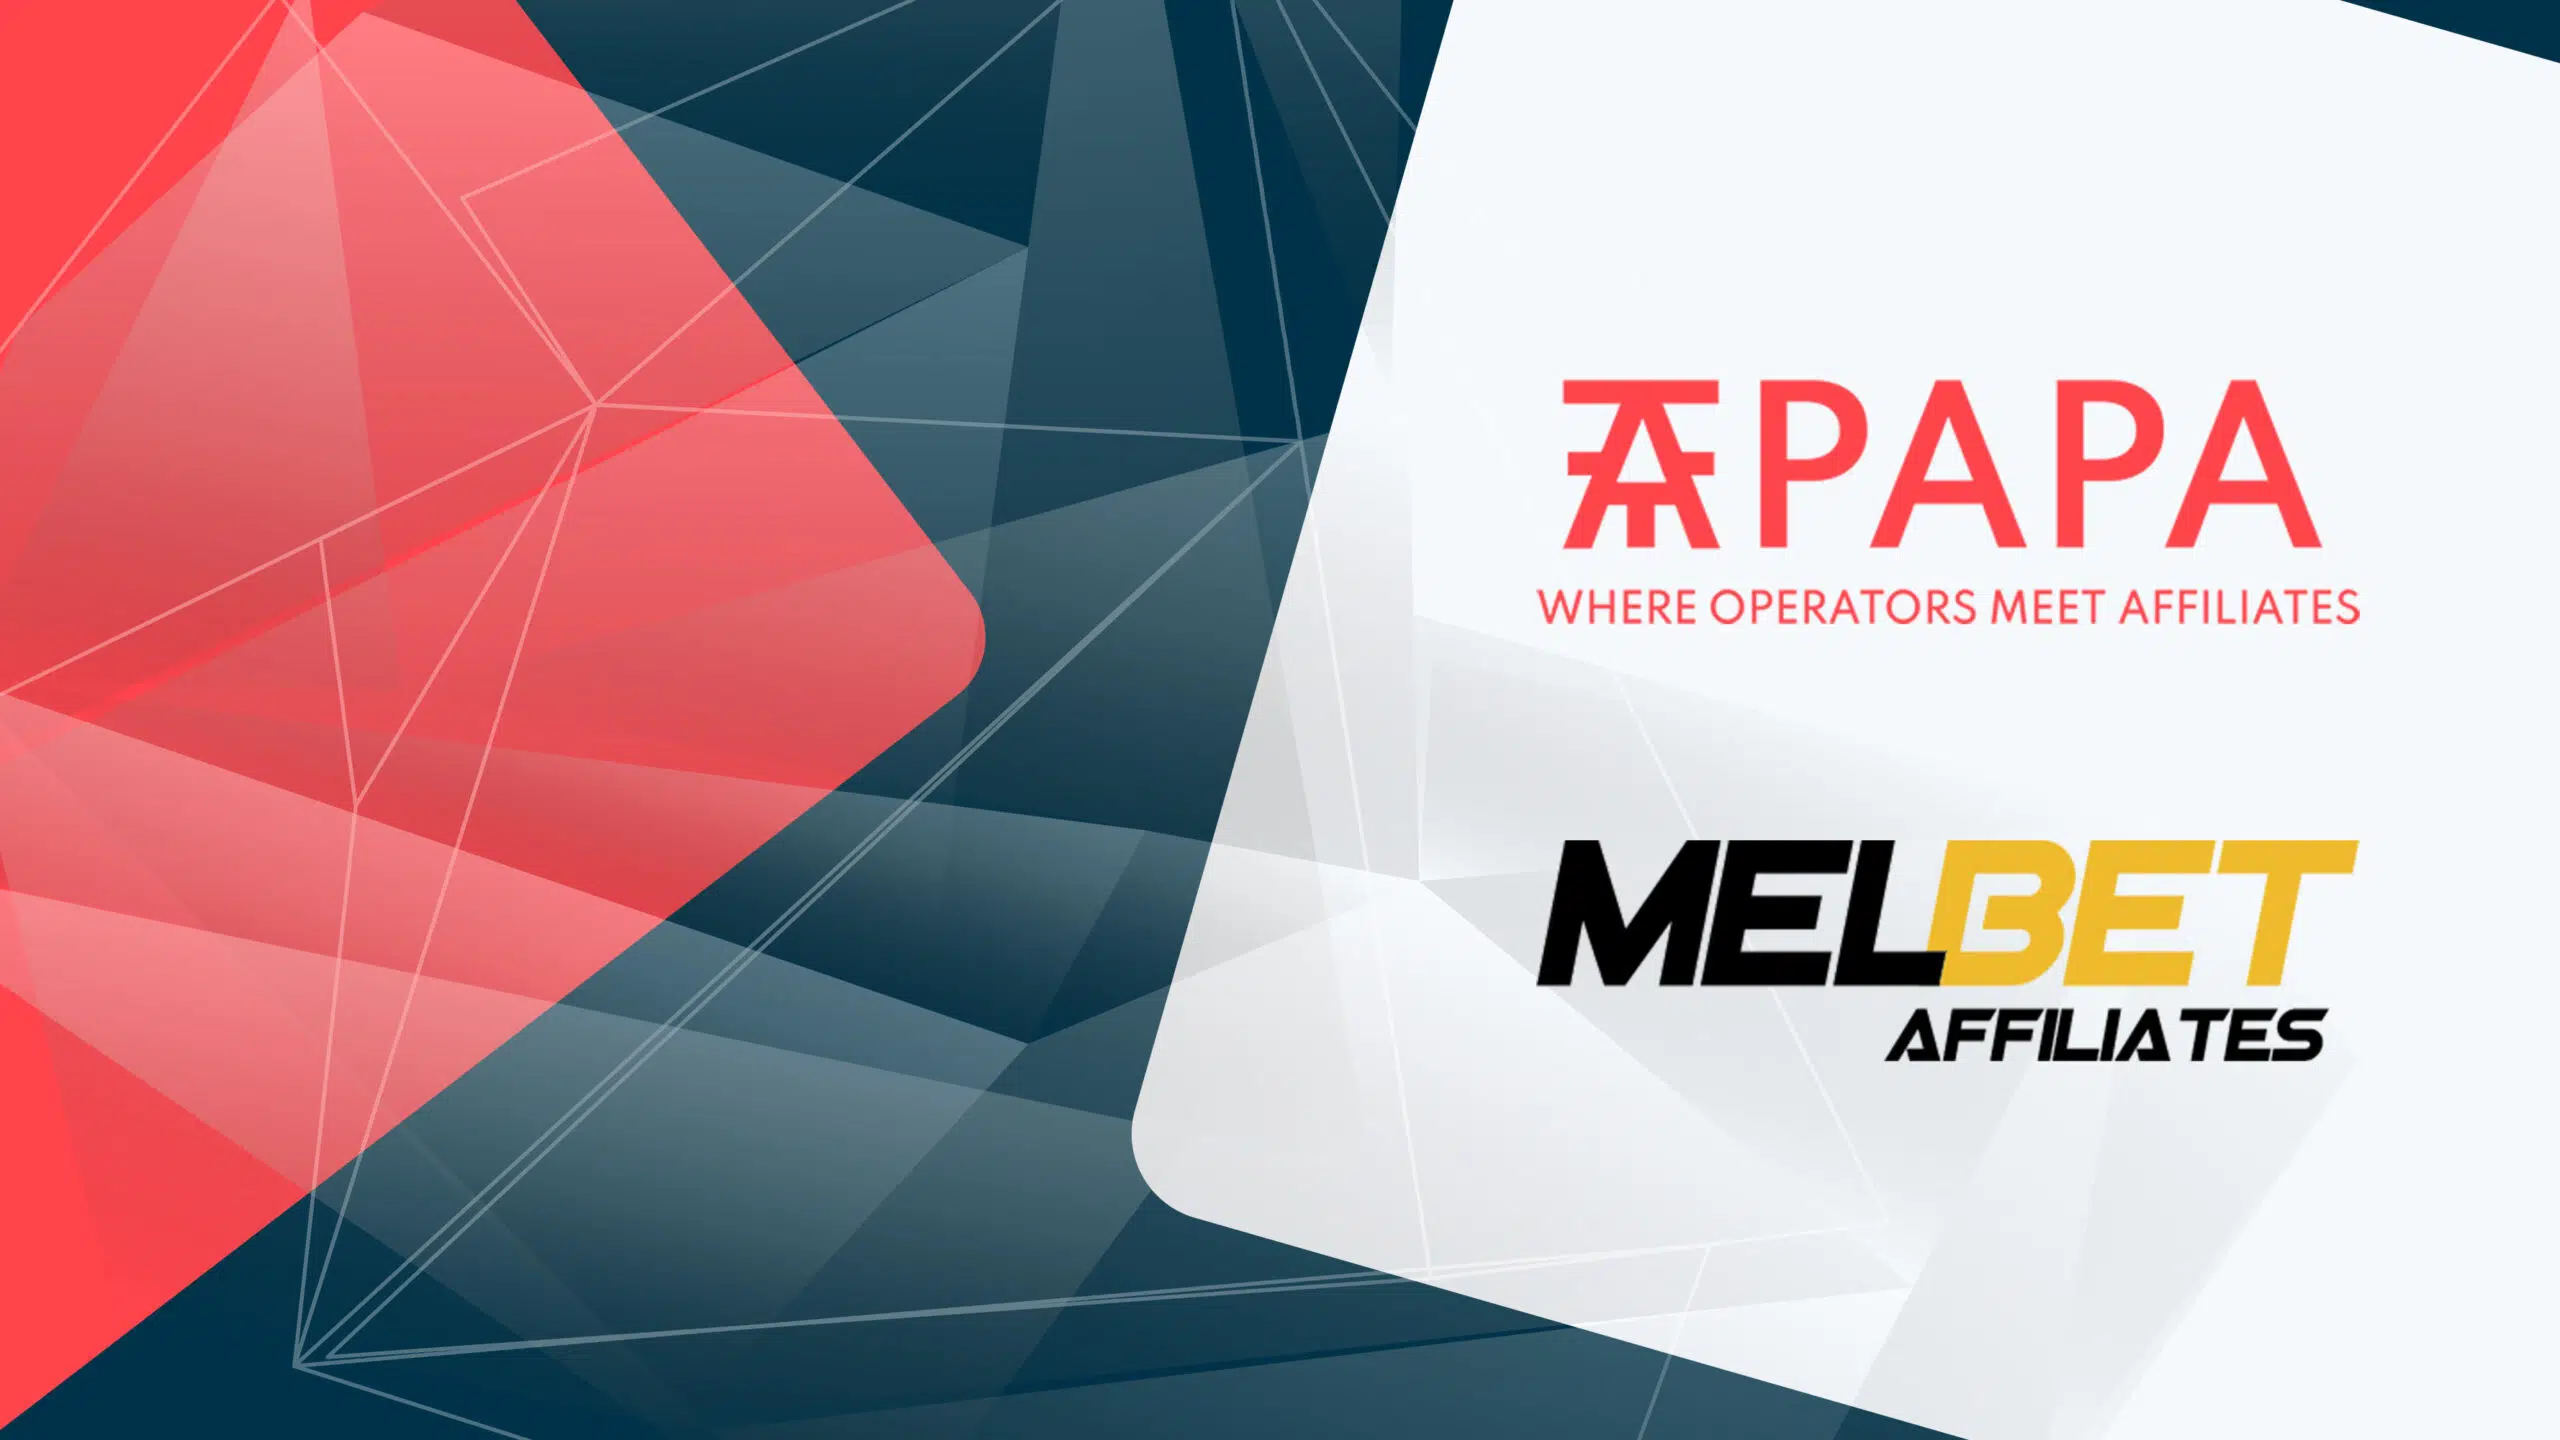 AffPapa strengthens its bond with MelBet Affiliates